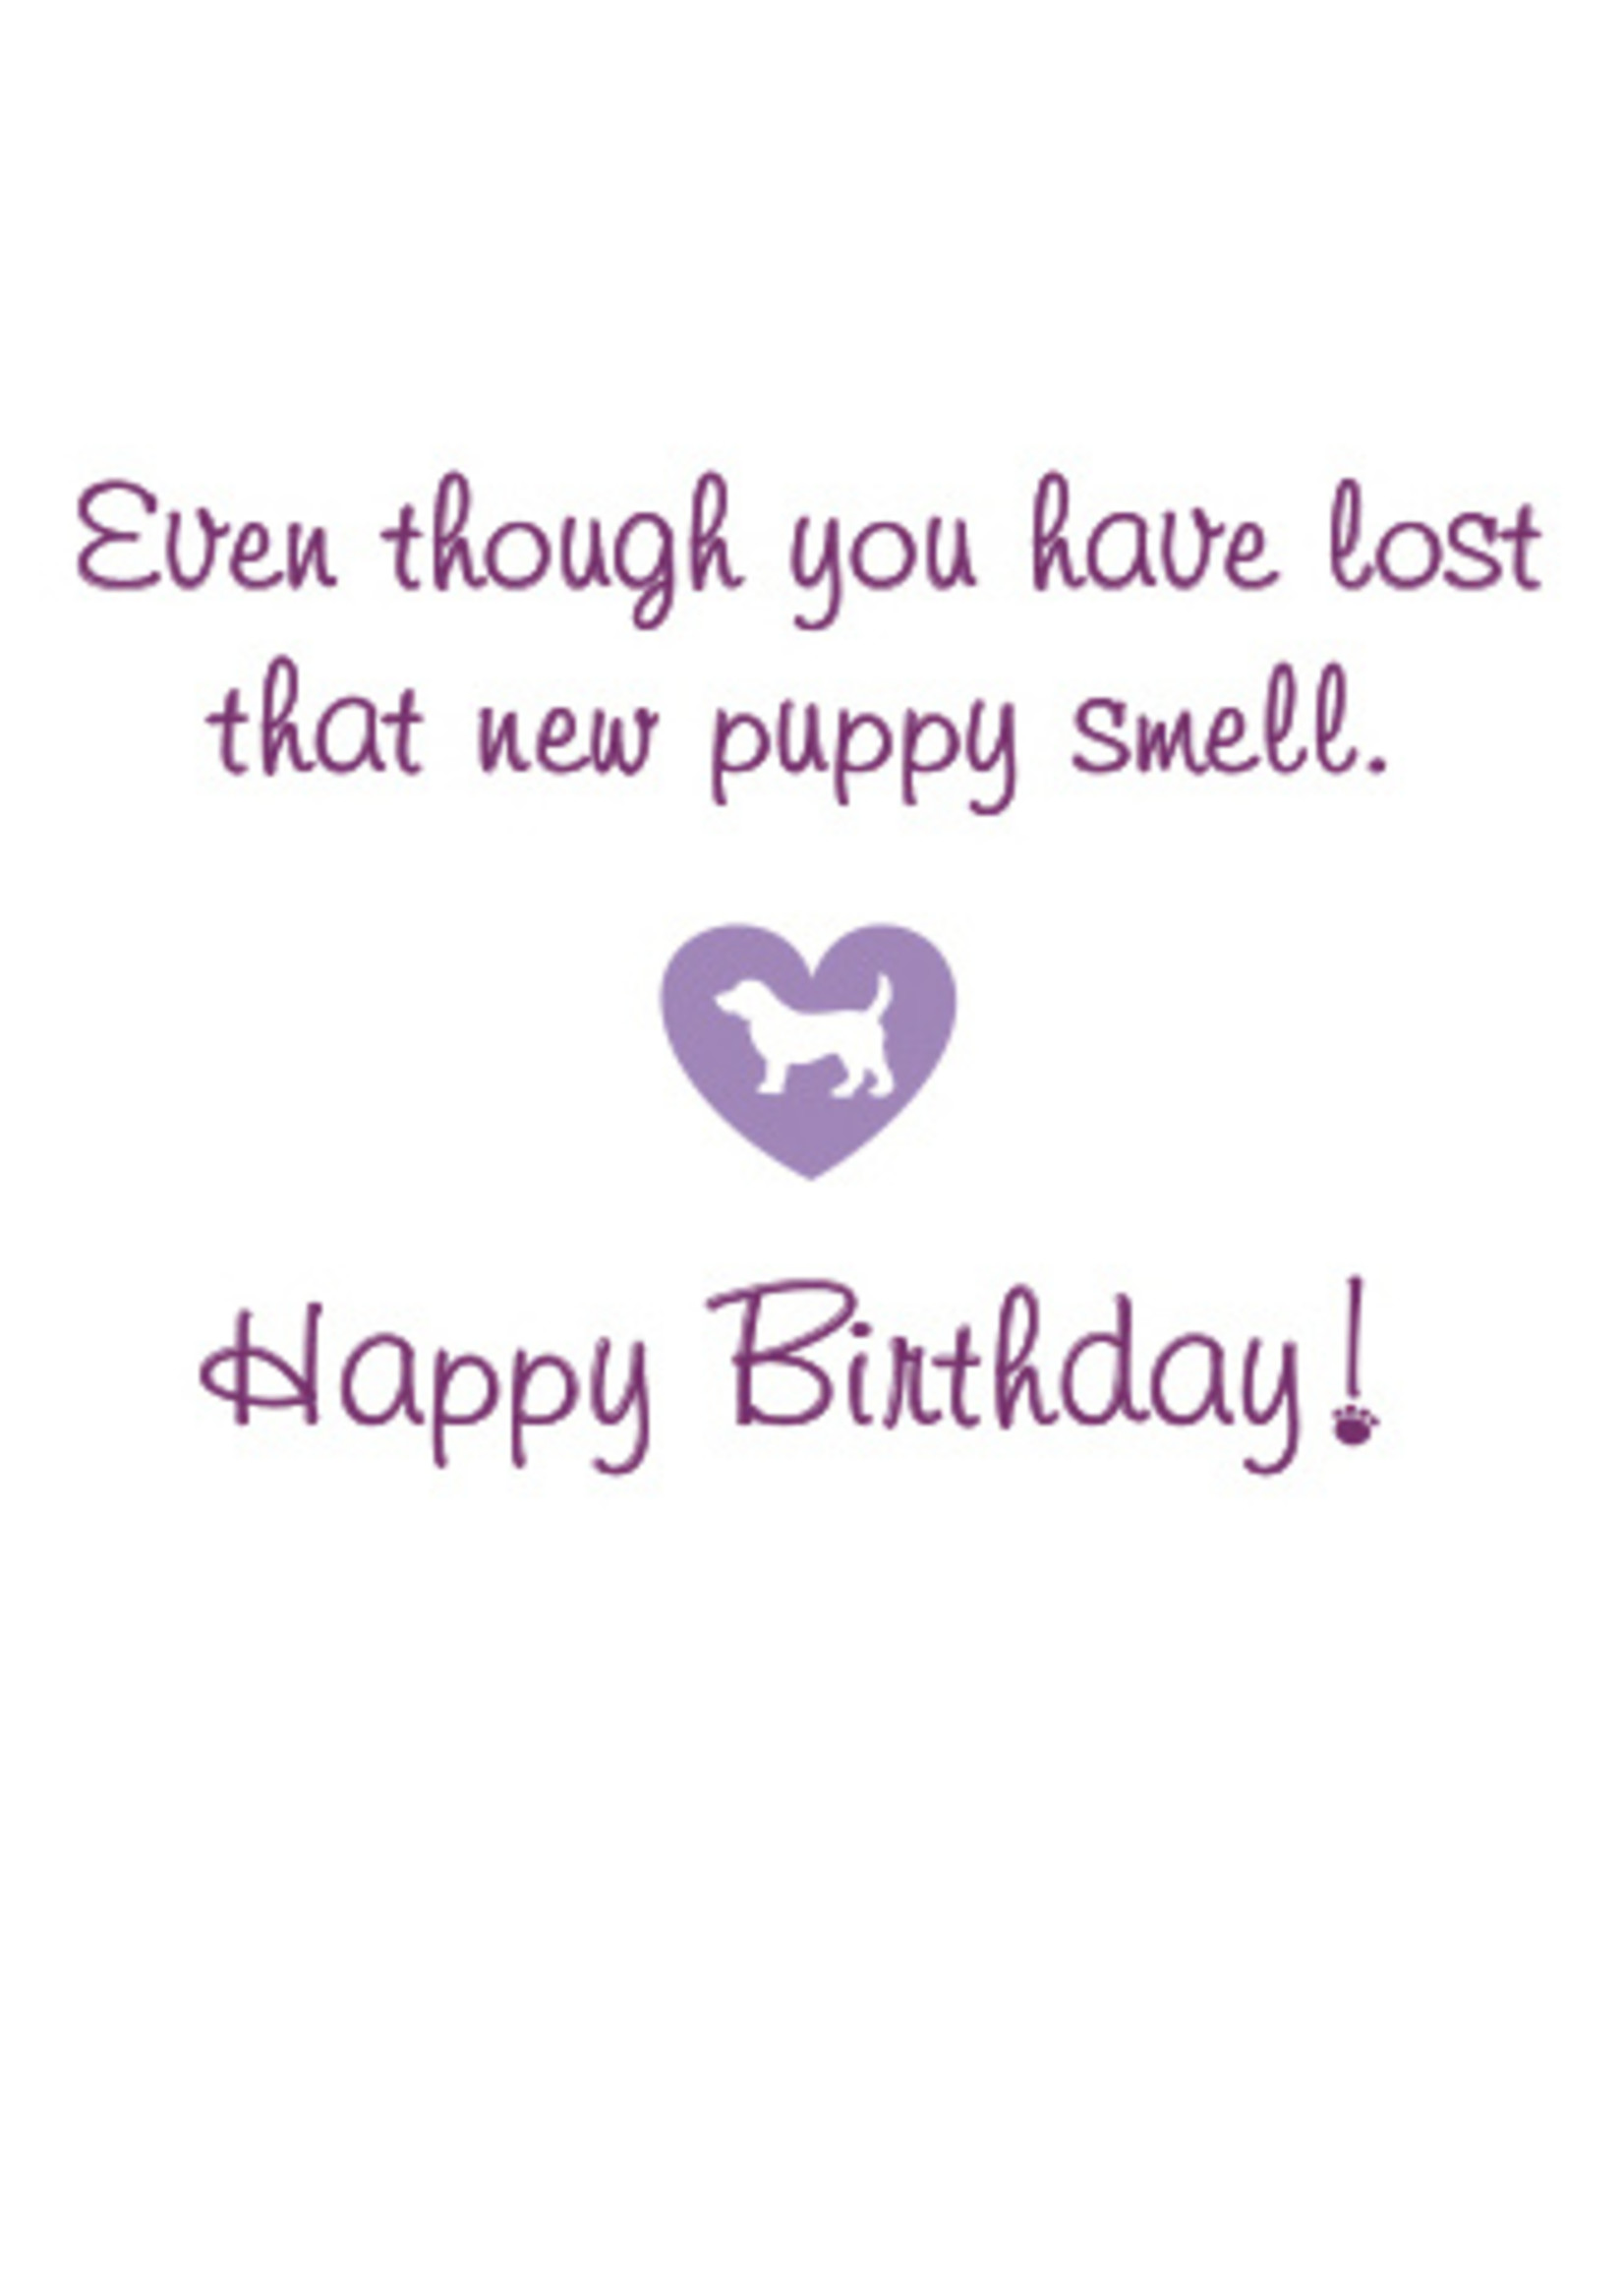 Purple Bow with Dog Birthday Card